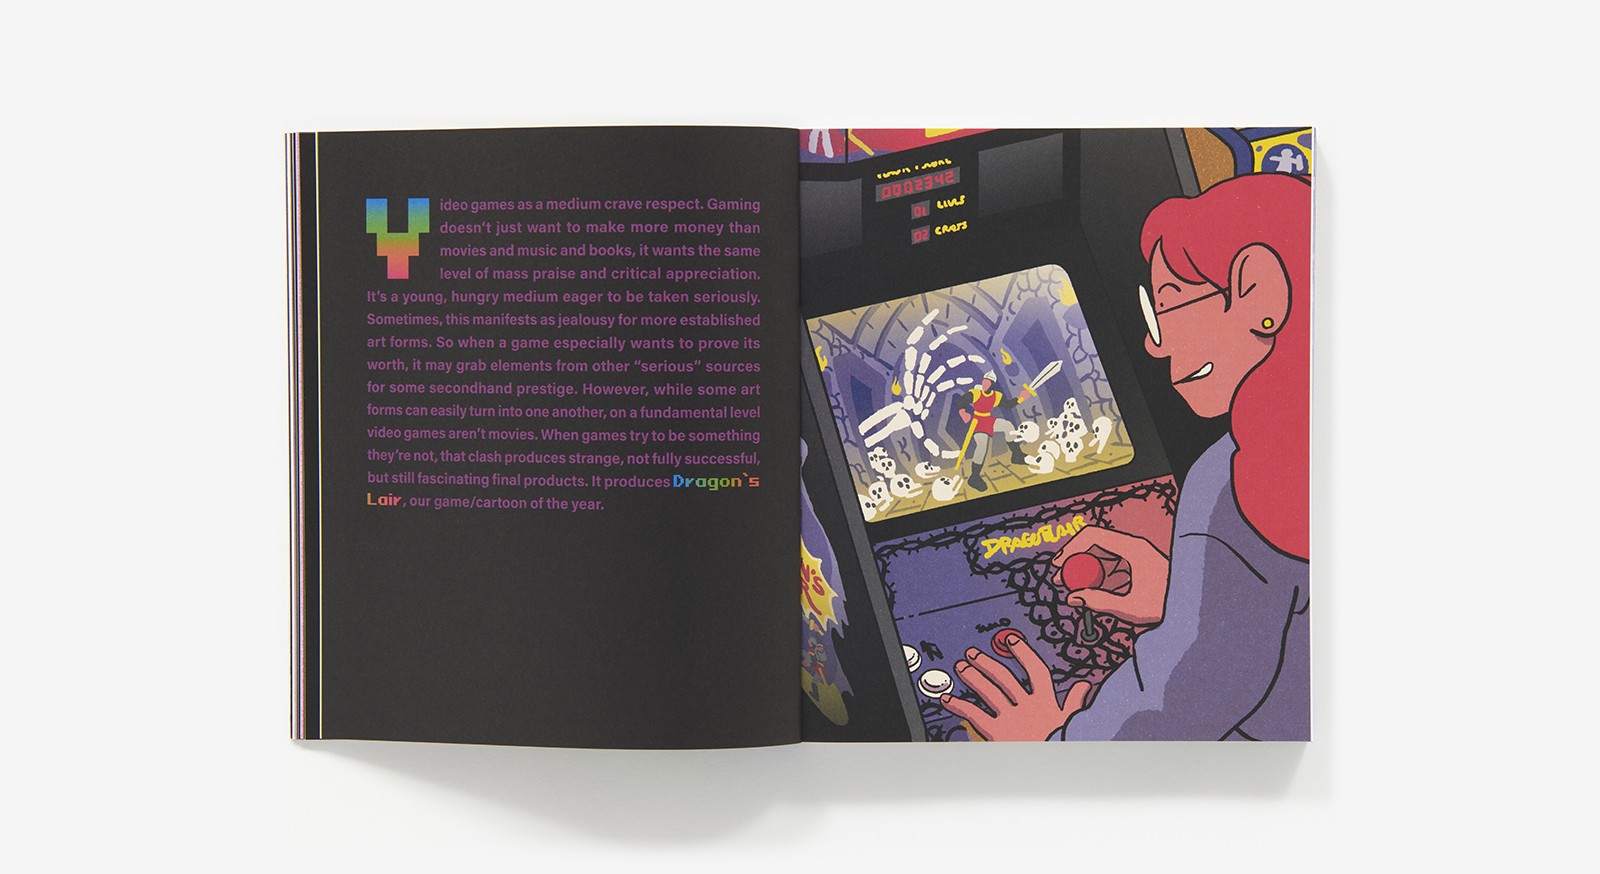 Animal Crossing New Horizons Coloring Book: Jumbo Coloring Books